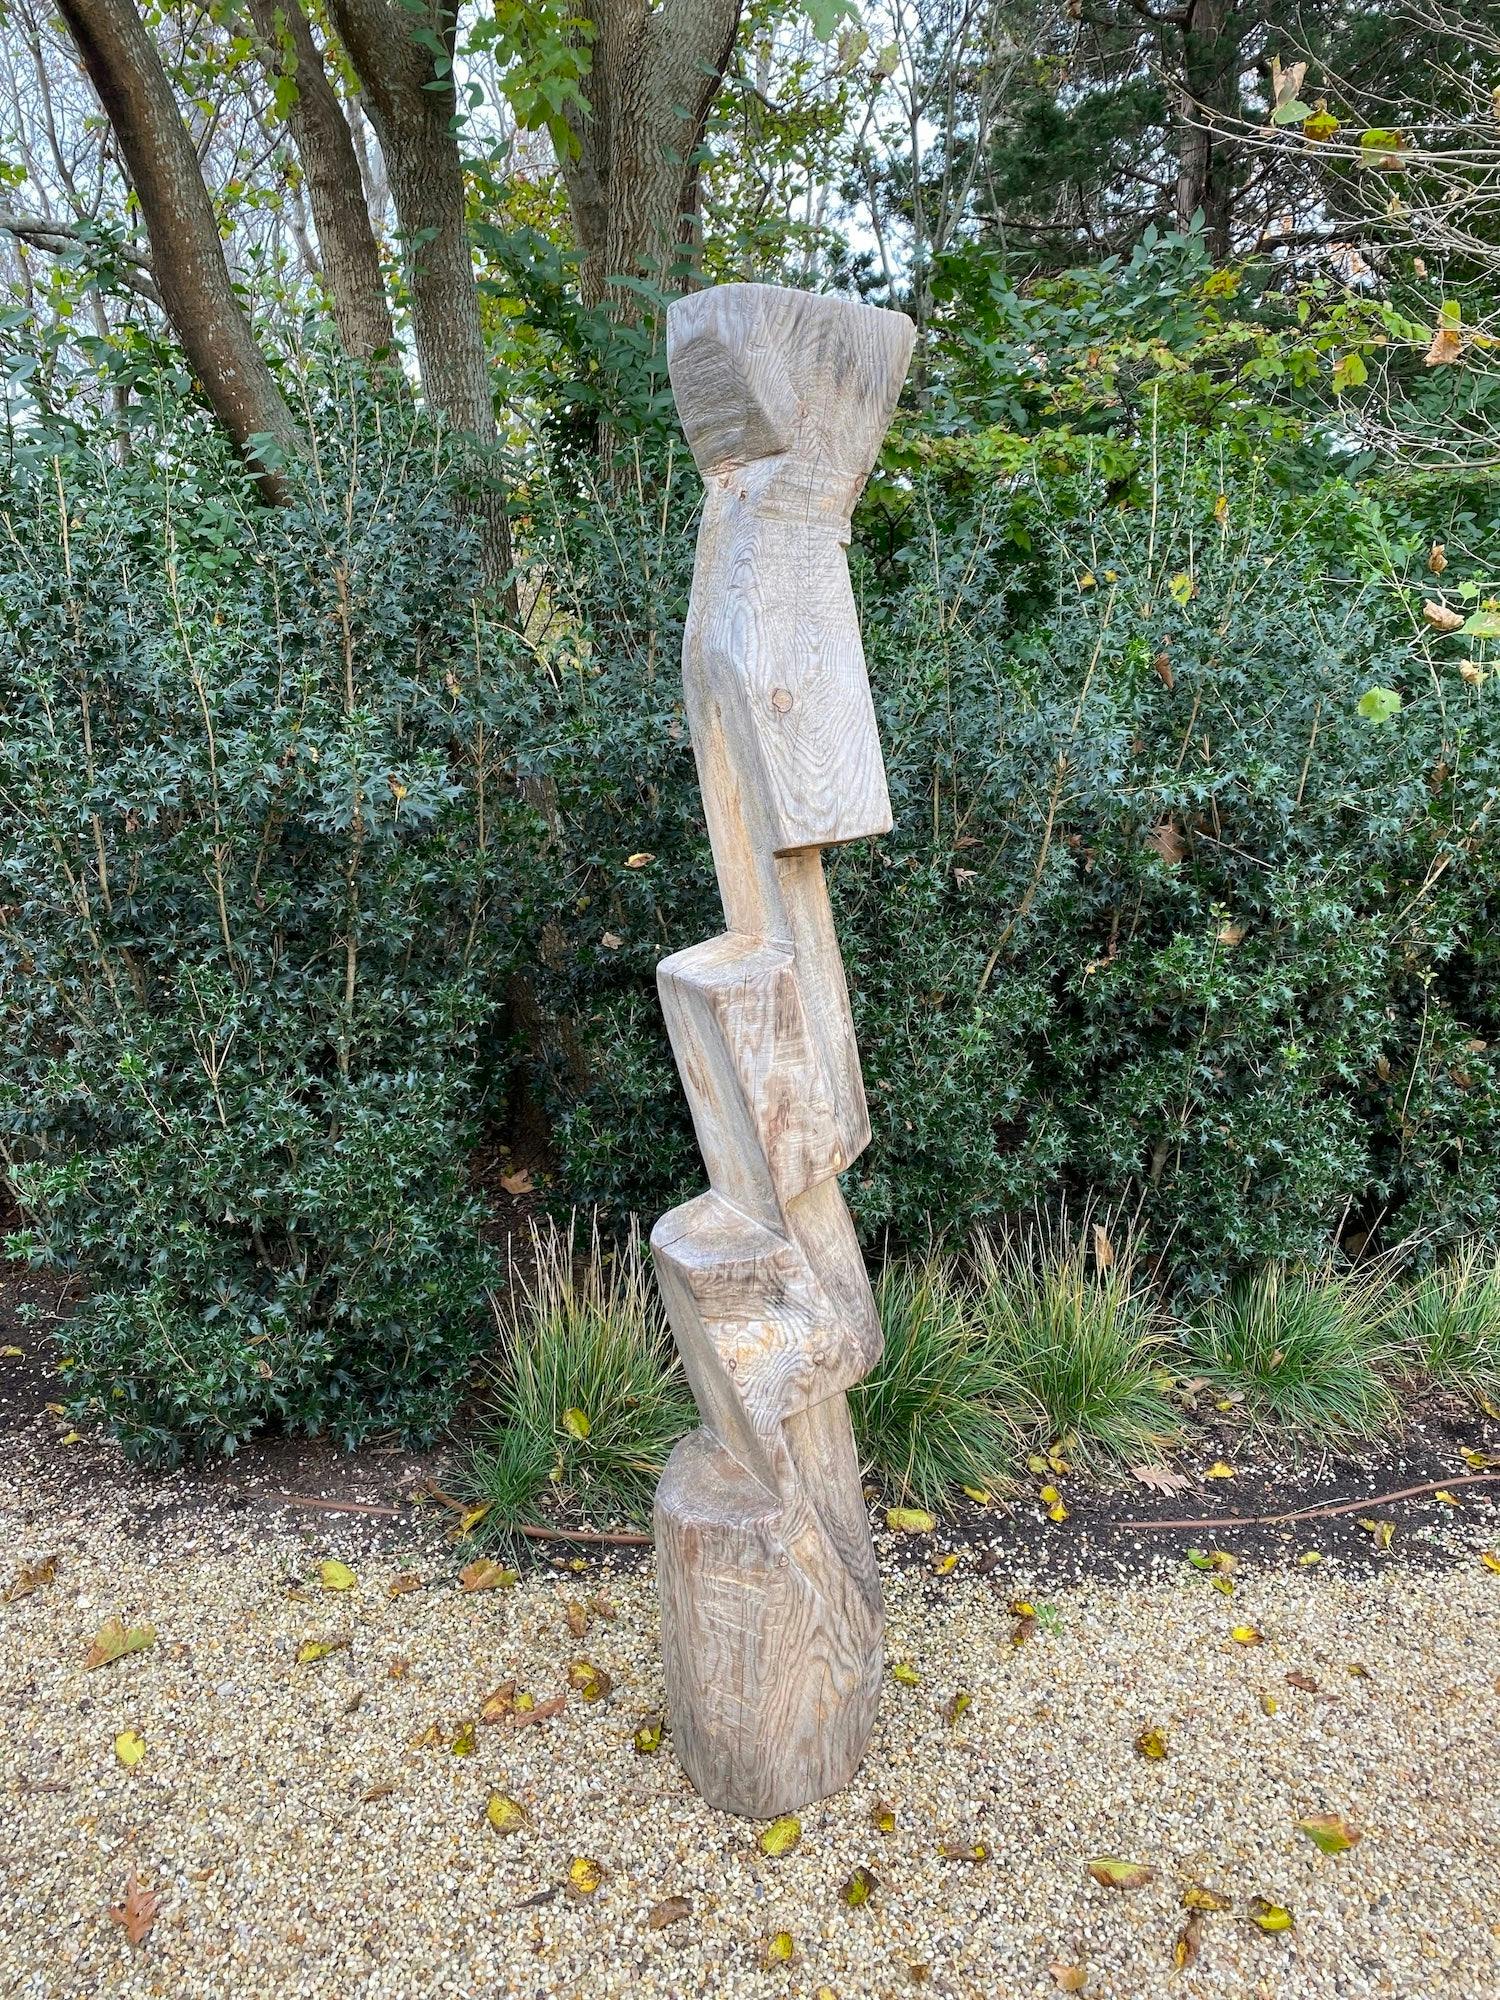 Sculpture by Fitzhugh Karol titled "Carving 2021.6".